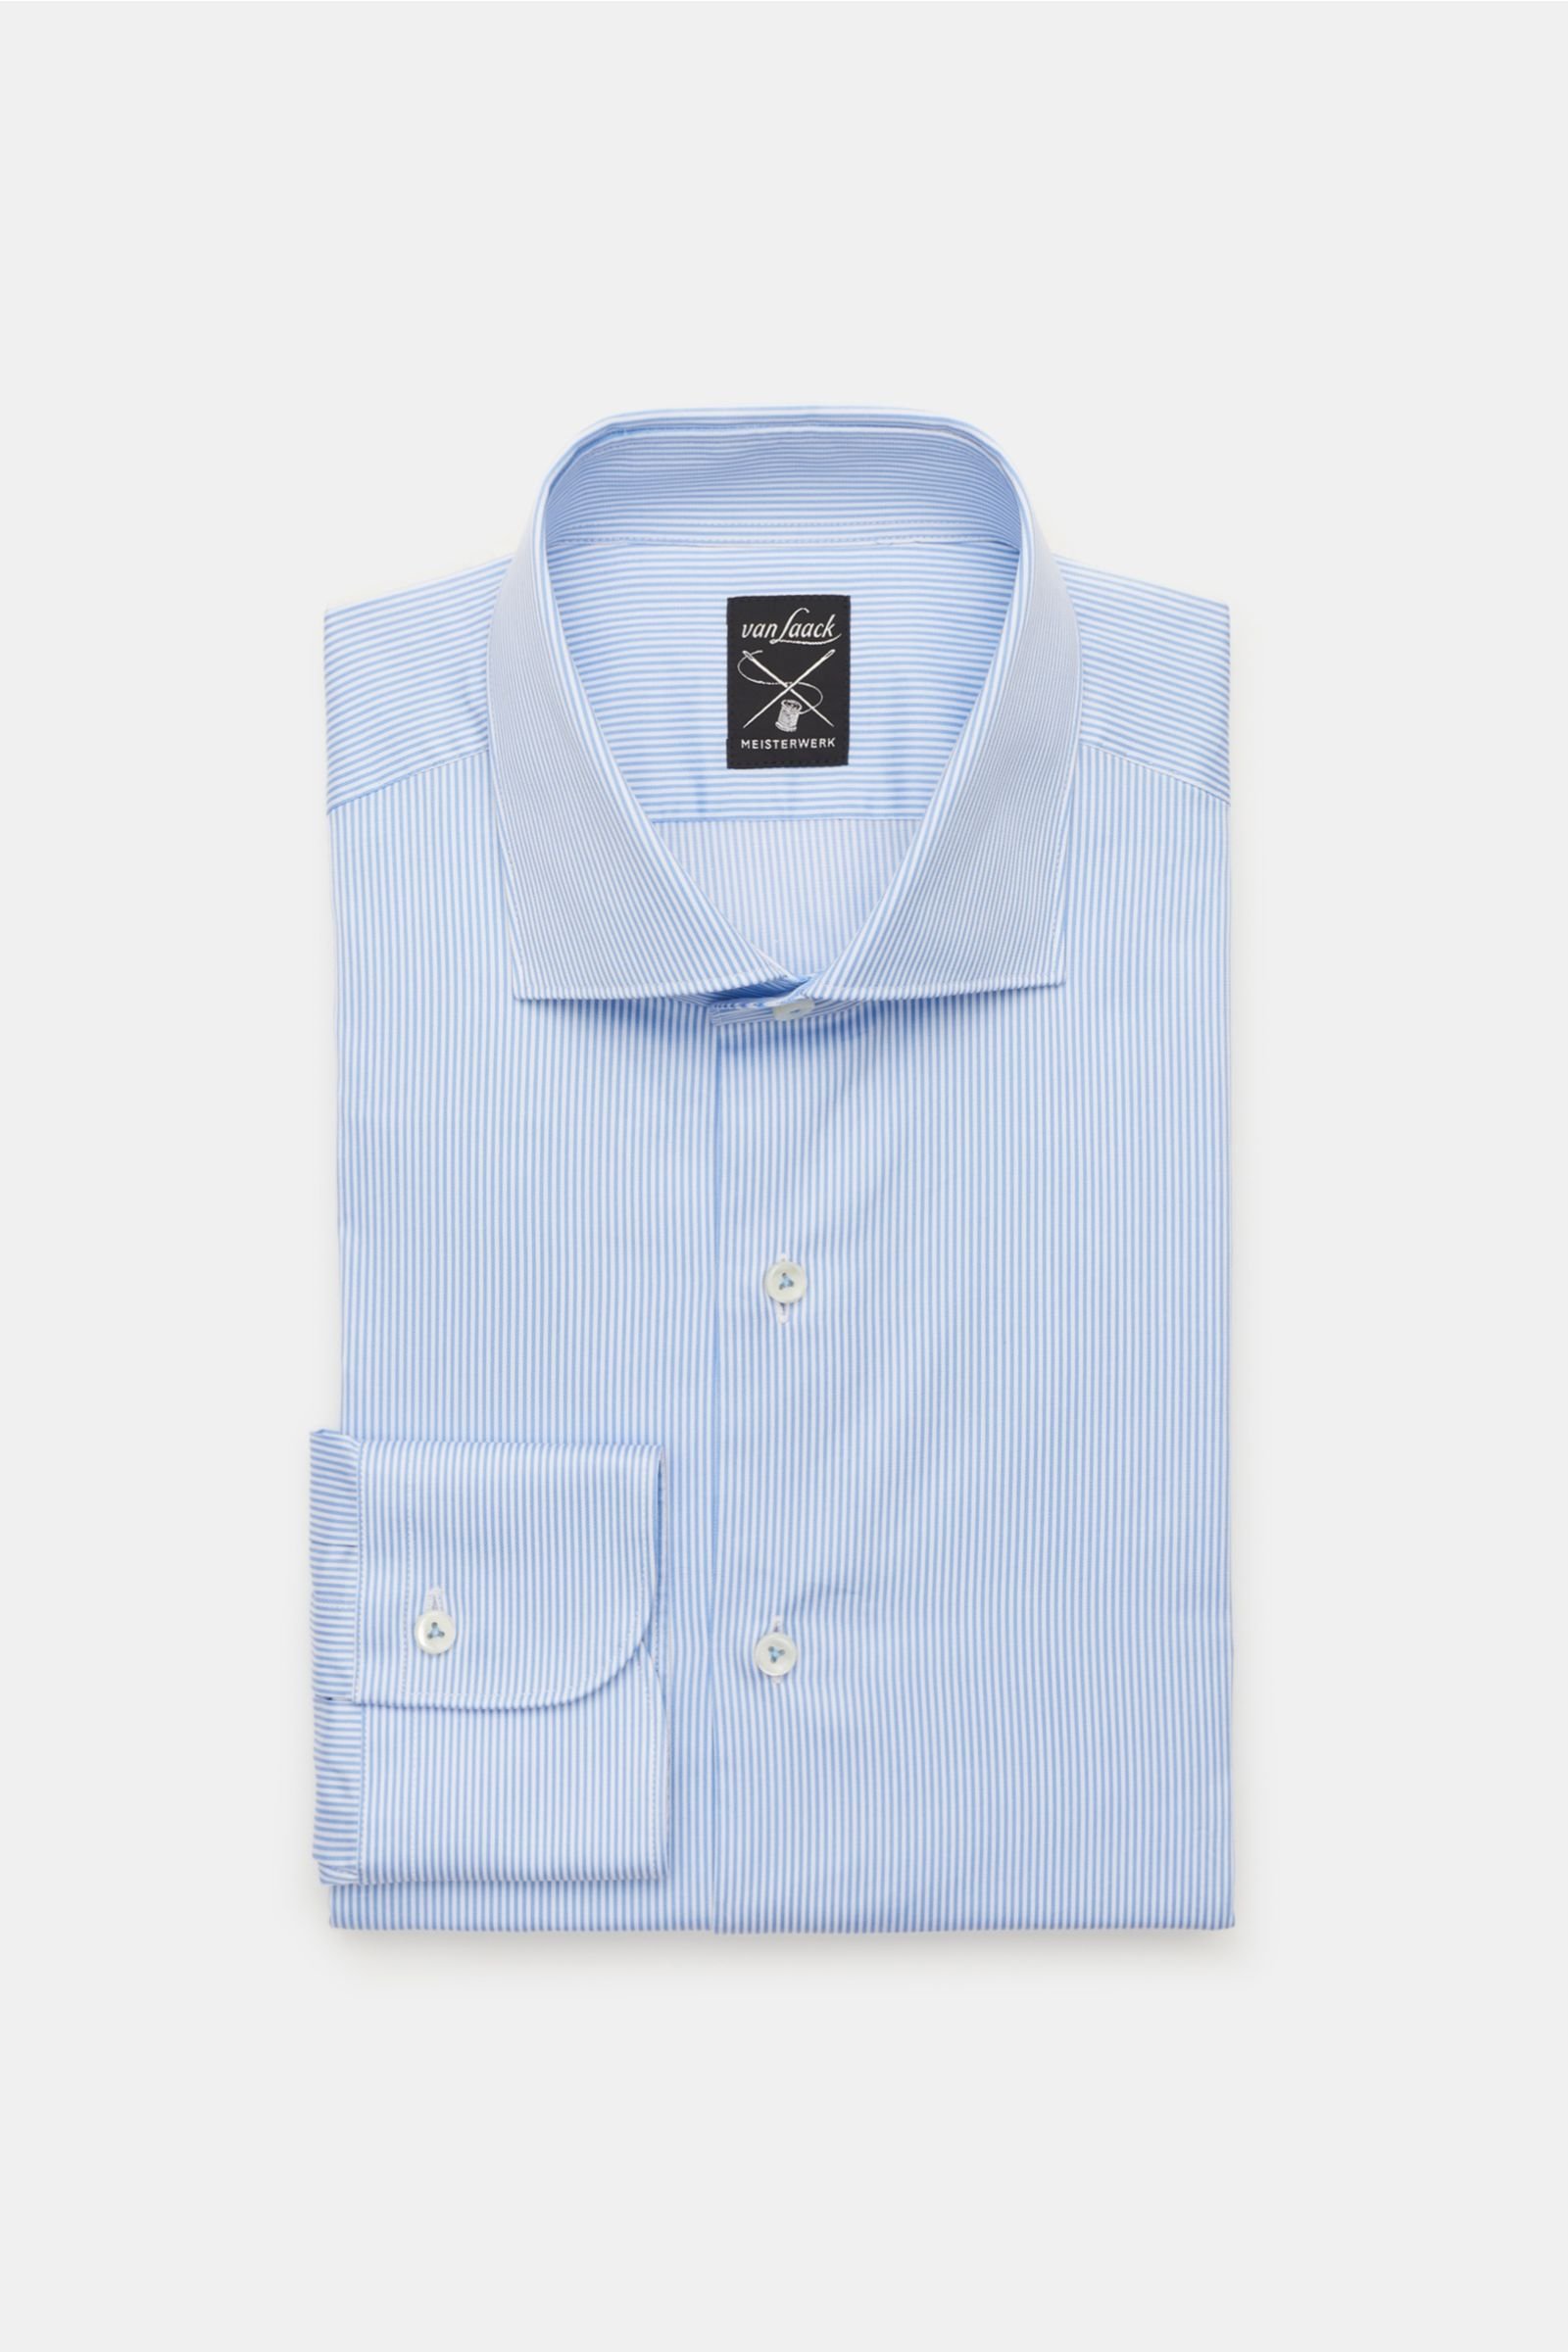 Business shirt 'Mivara Tailor Fit' shark collar light blue/white striped